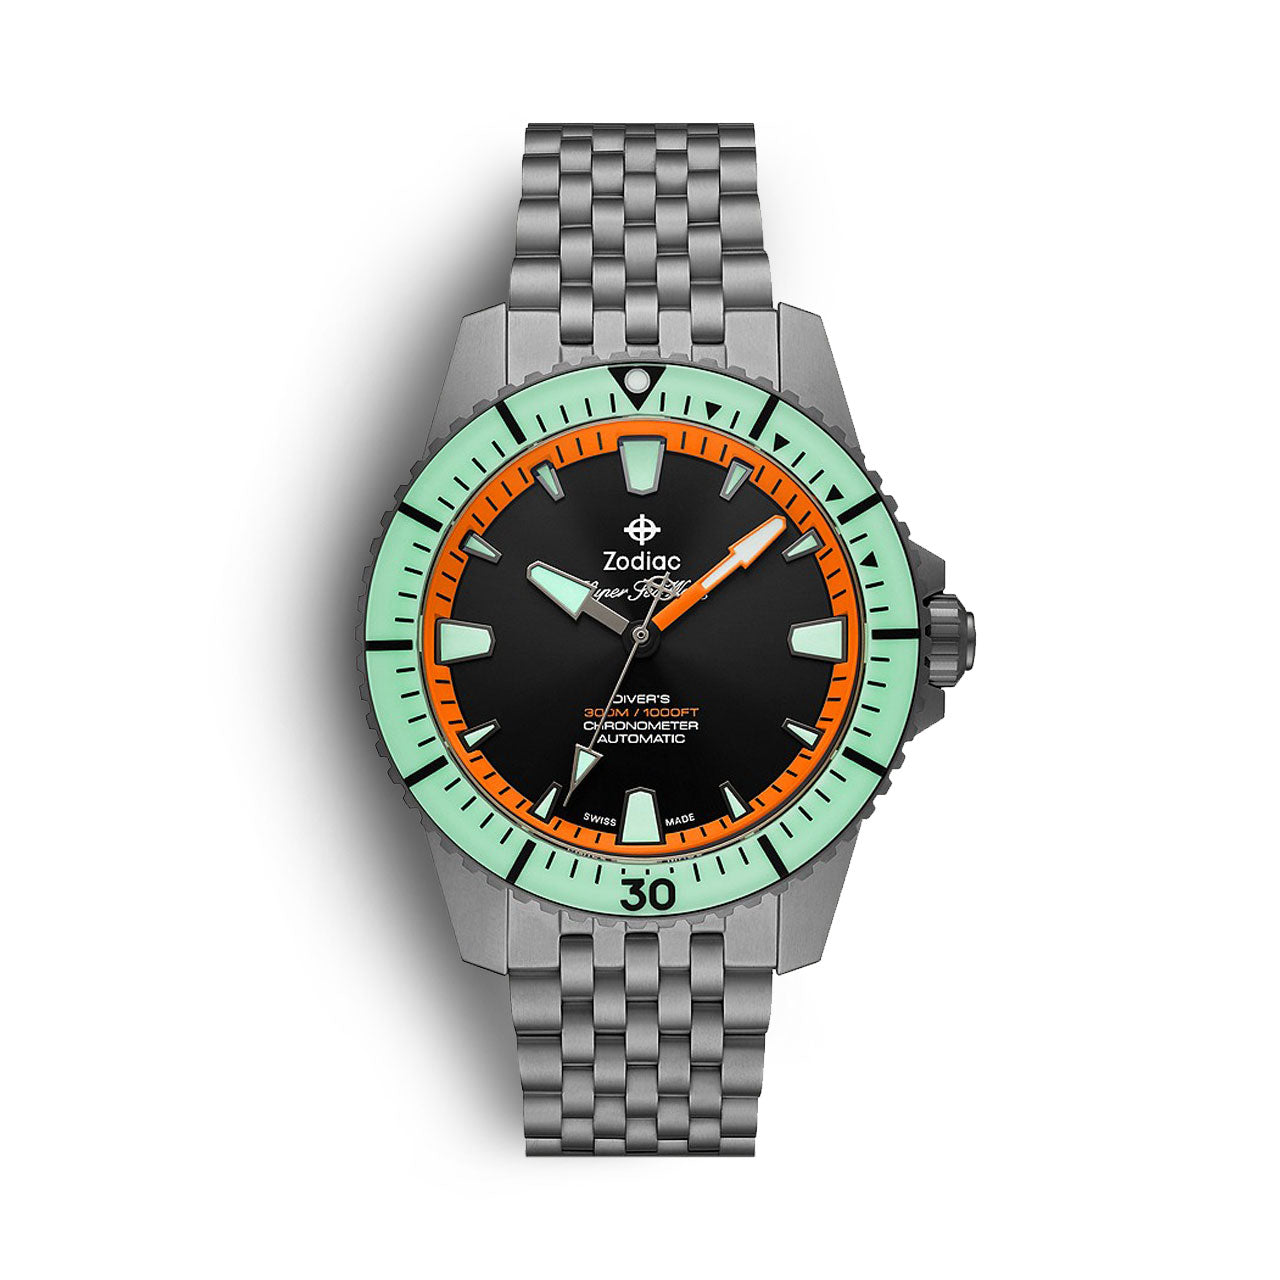 Zodiac Super Sea Wolf Titanium Limited Edition Watch